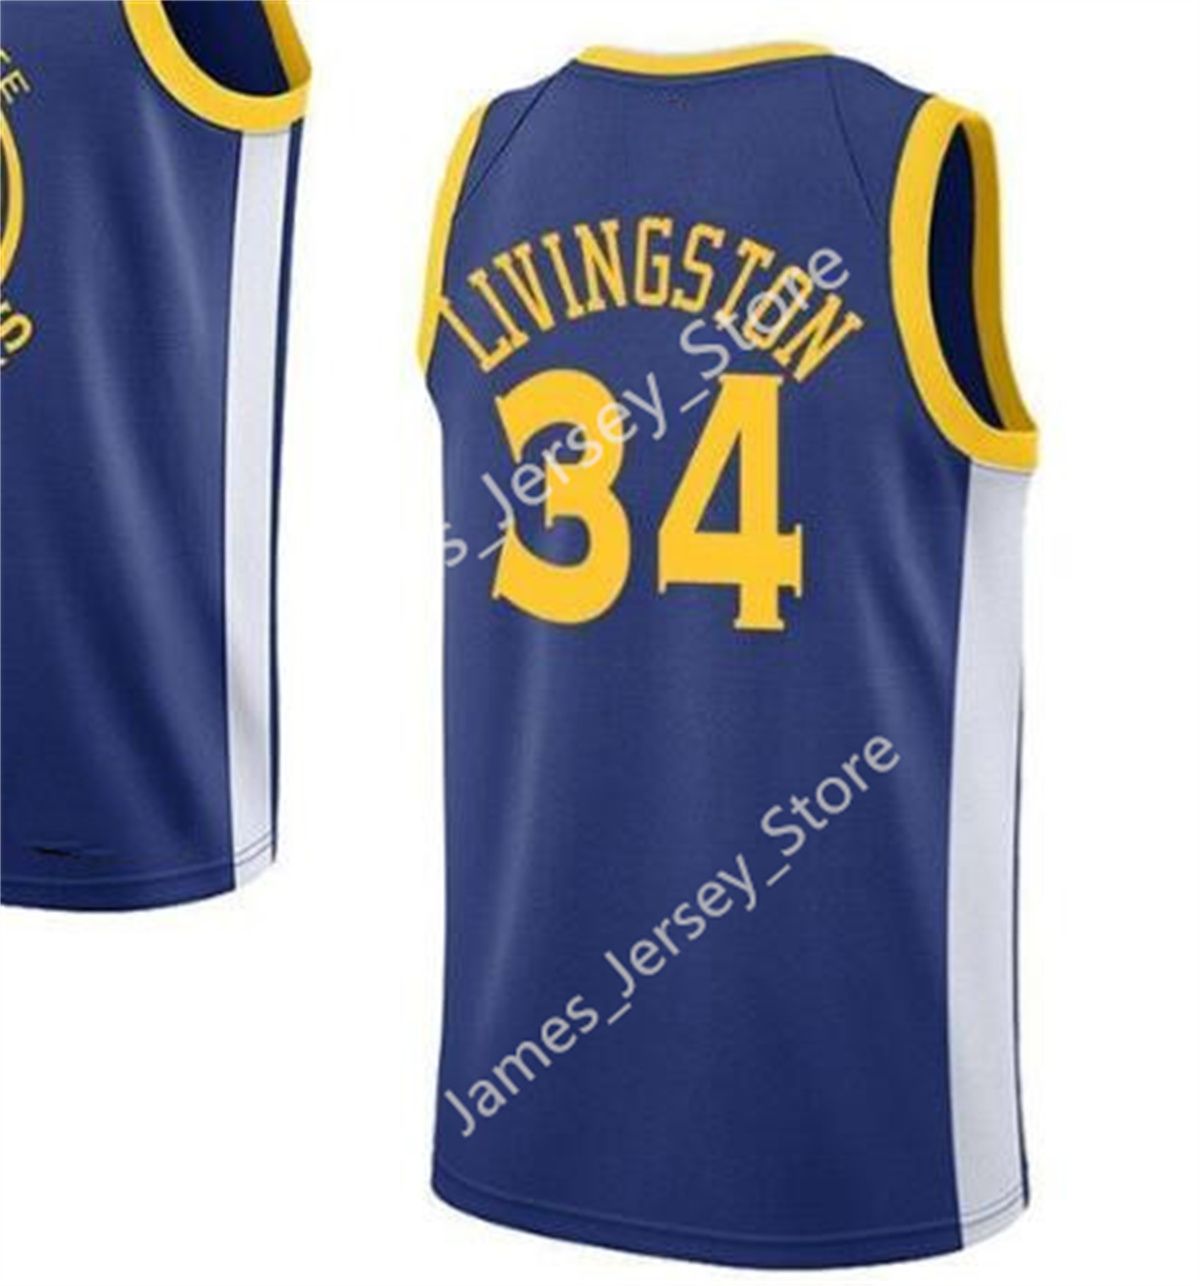 Chris Livingston Basketball Jersey